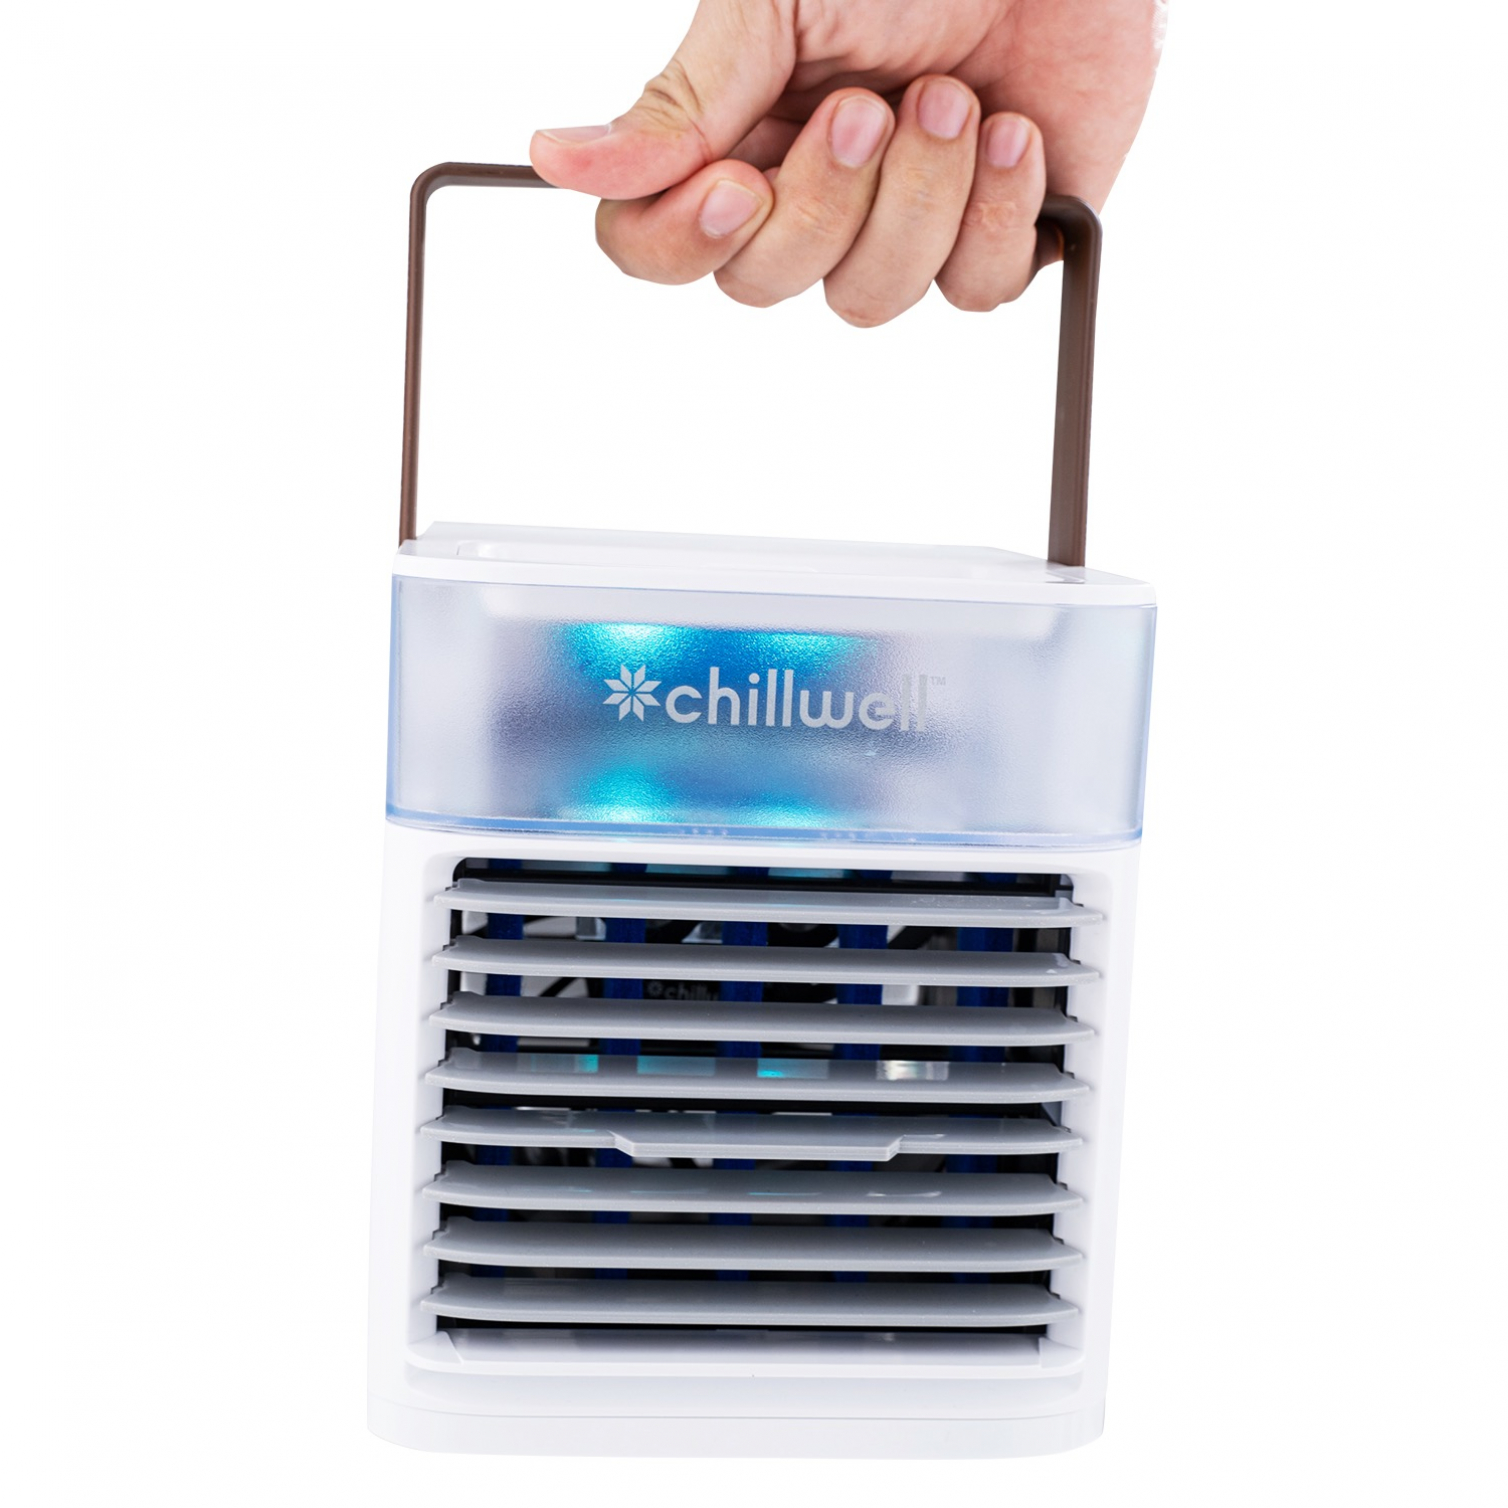 Chillwell Ac Dehumidifier Settings